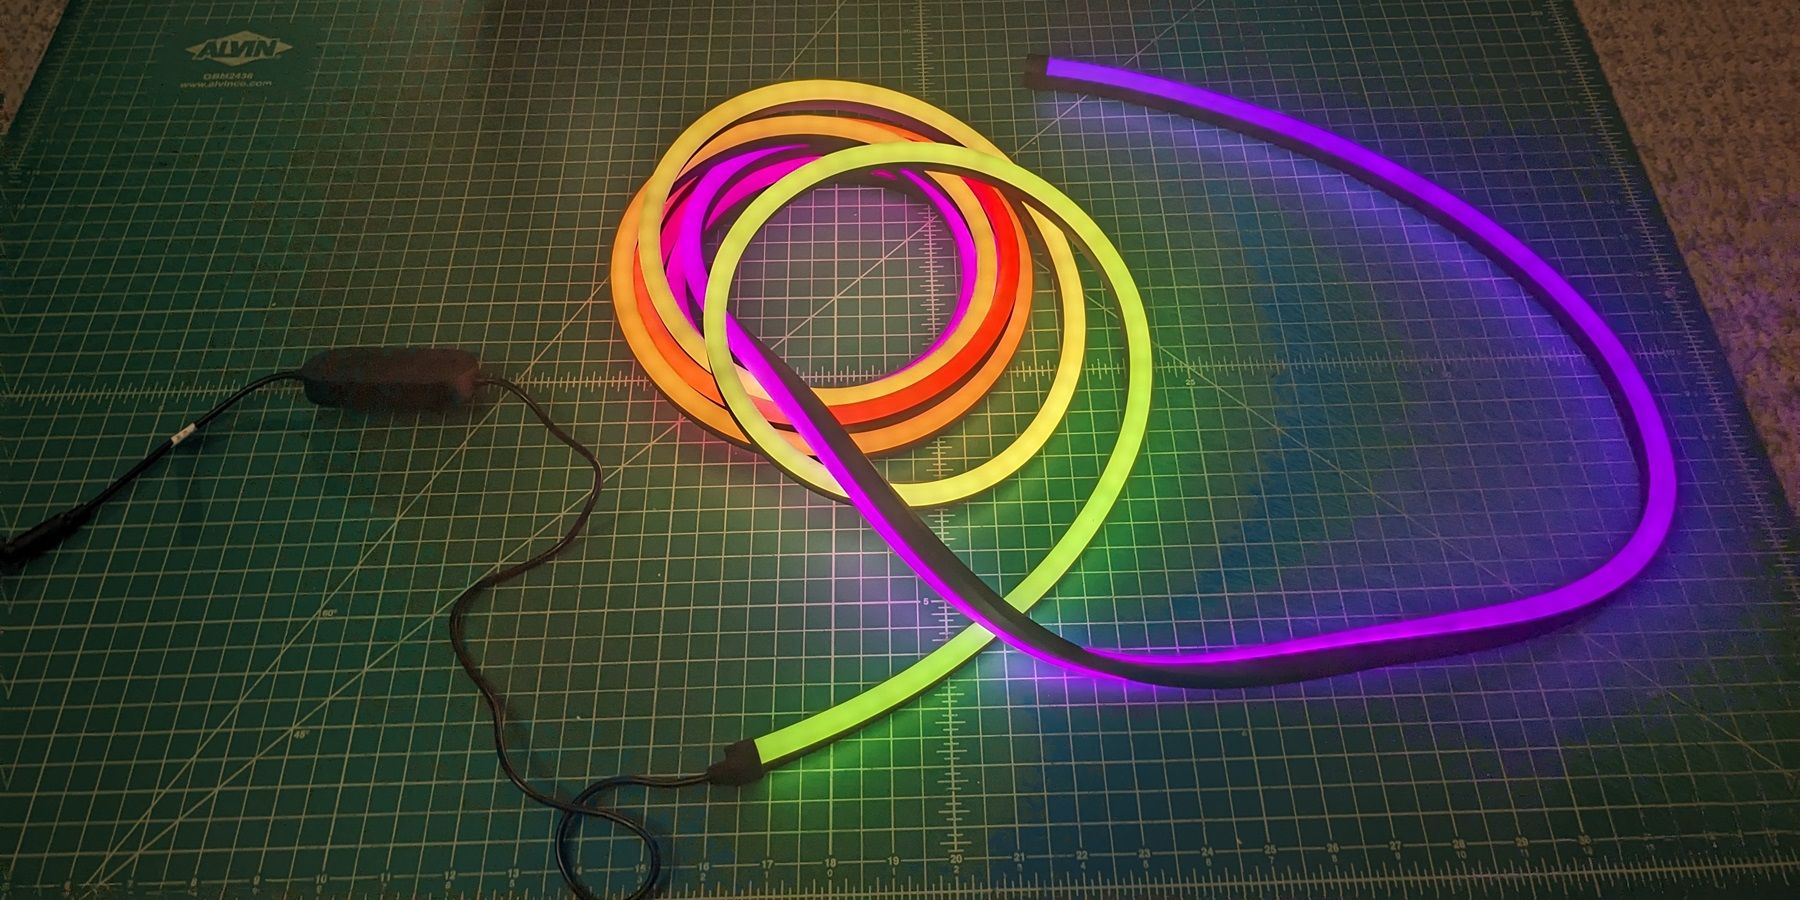 Govee Neon Rope Light 2 Install #1